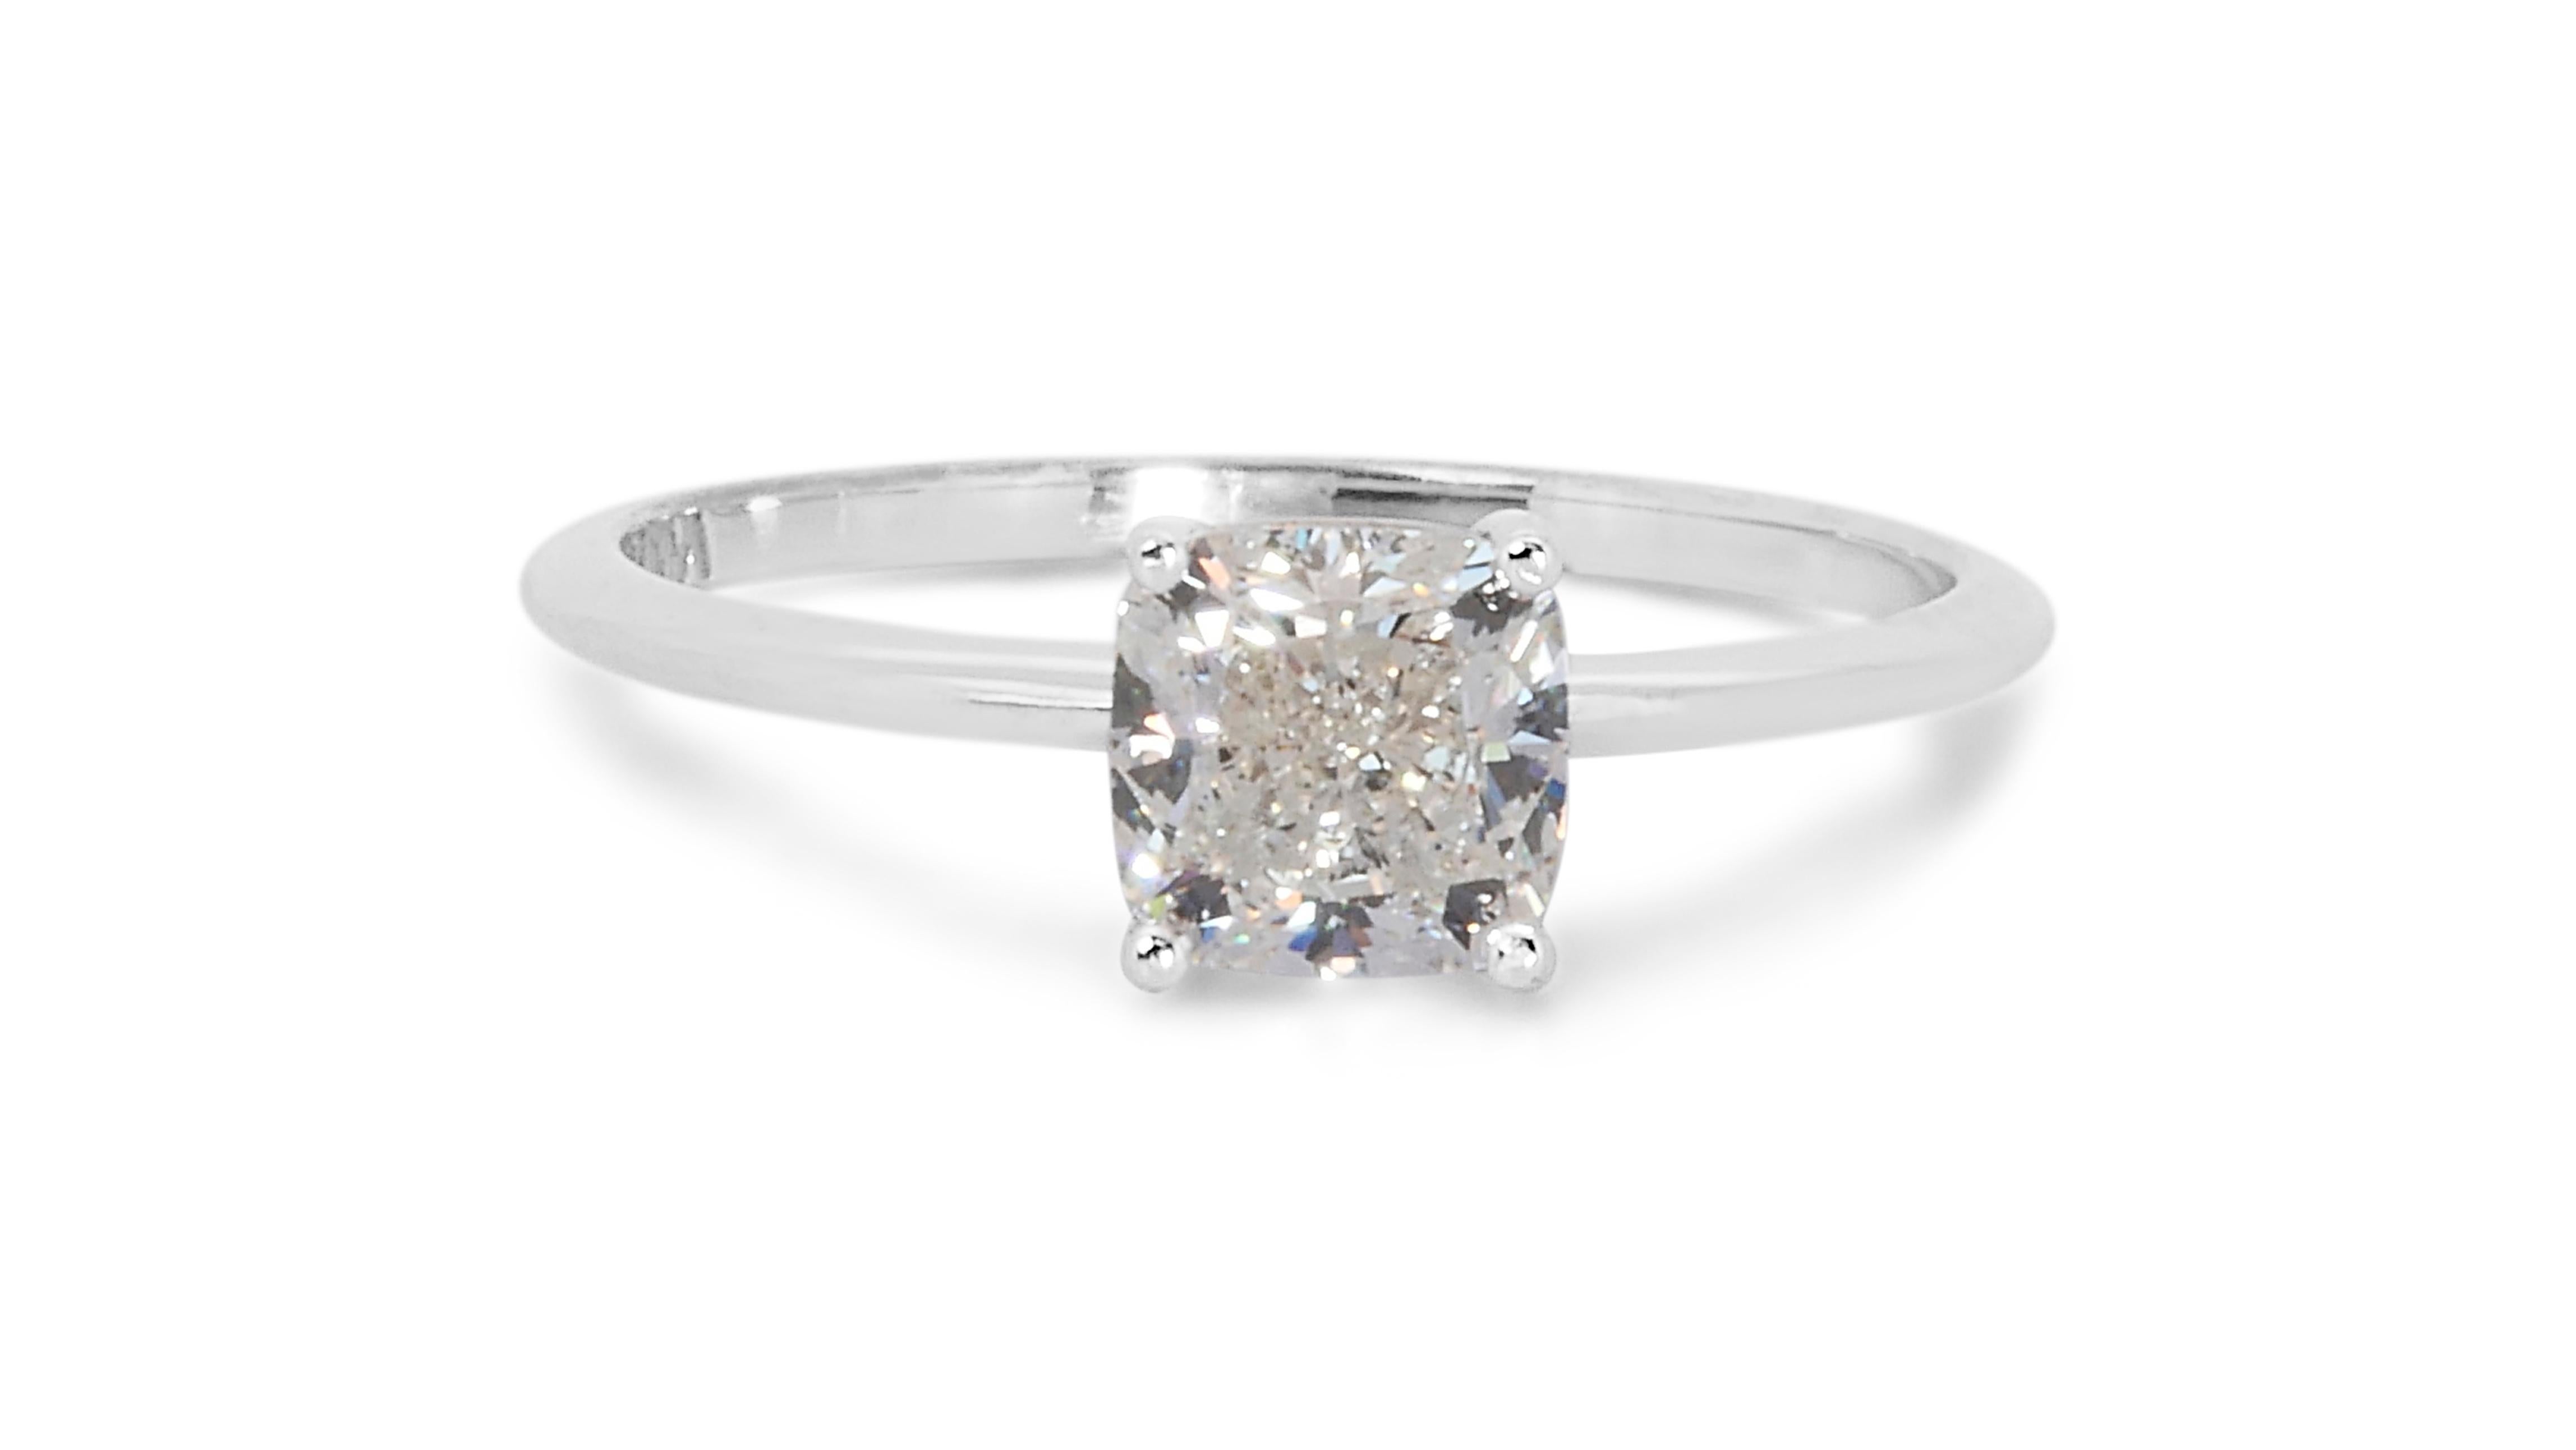 Cushion Cut 18k White Gold Solitaire Engagement Ring w/ 1.21 Carat Natural Diamonds IGI Cert